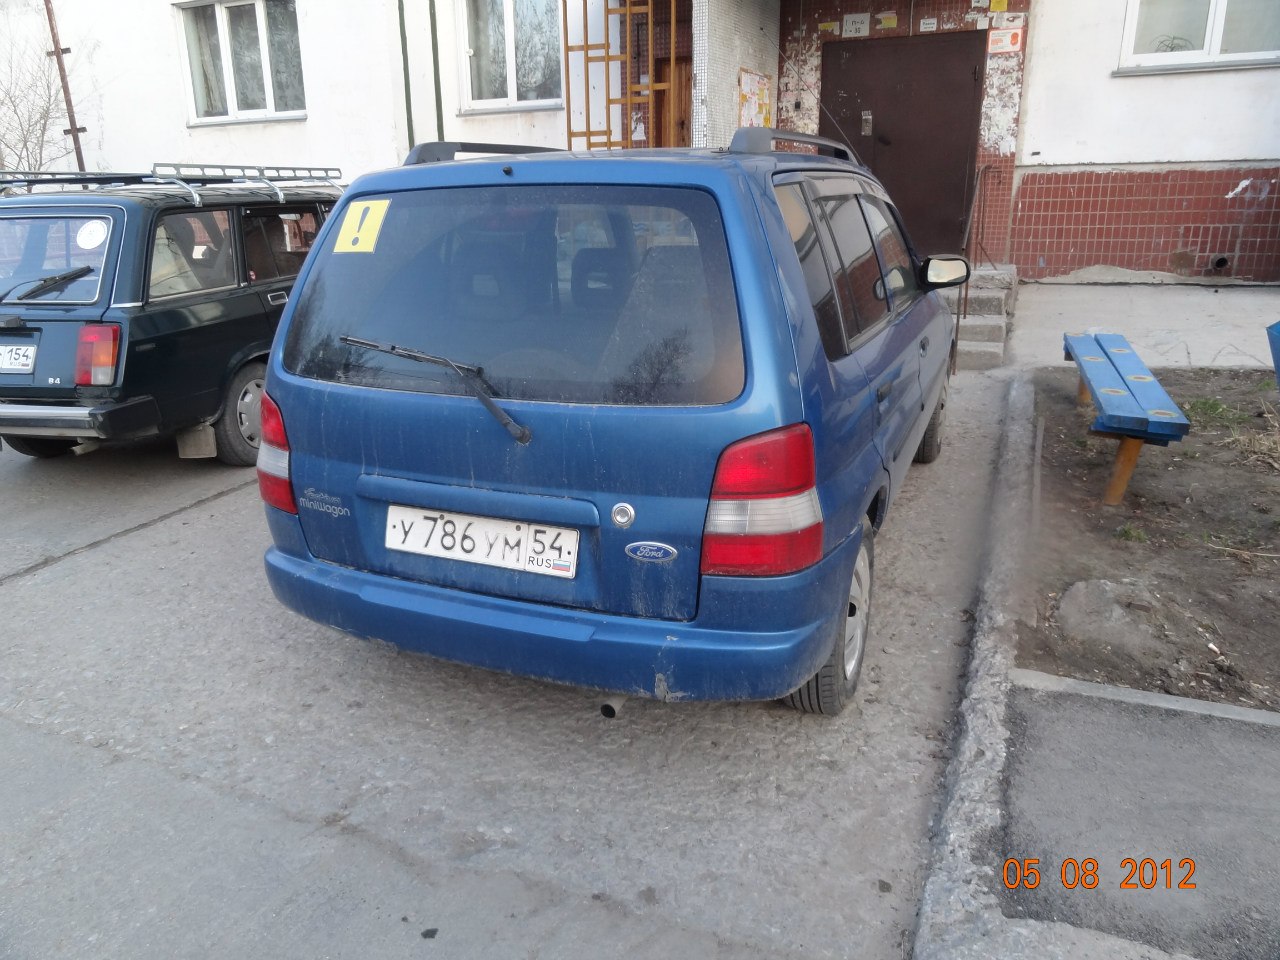 Japcar.ru - Каталог автомобилей - Ford Festiva Mini Wagon ...